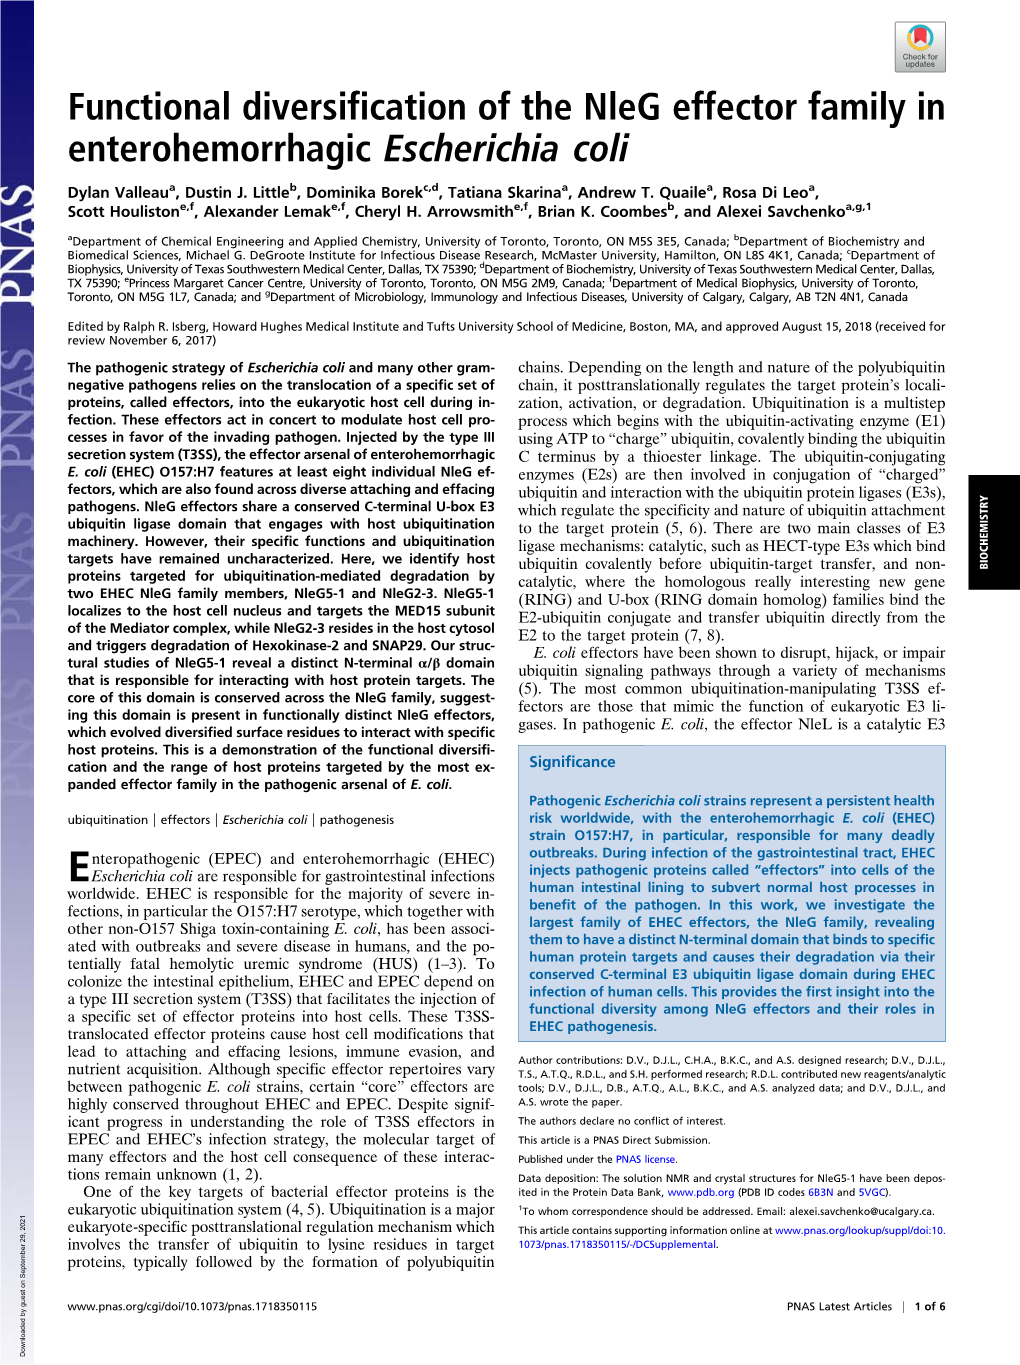 Functional Diversification of the Nleg Effector Family in Enterohemorrhagic Escherichia Coli